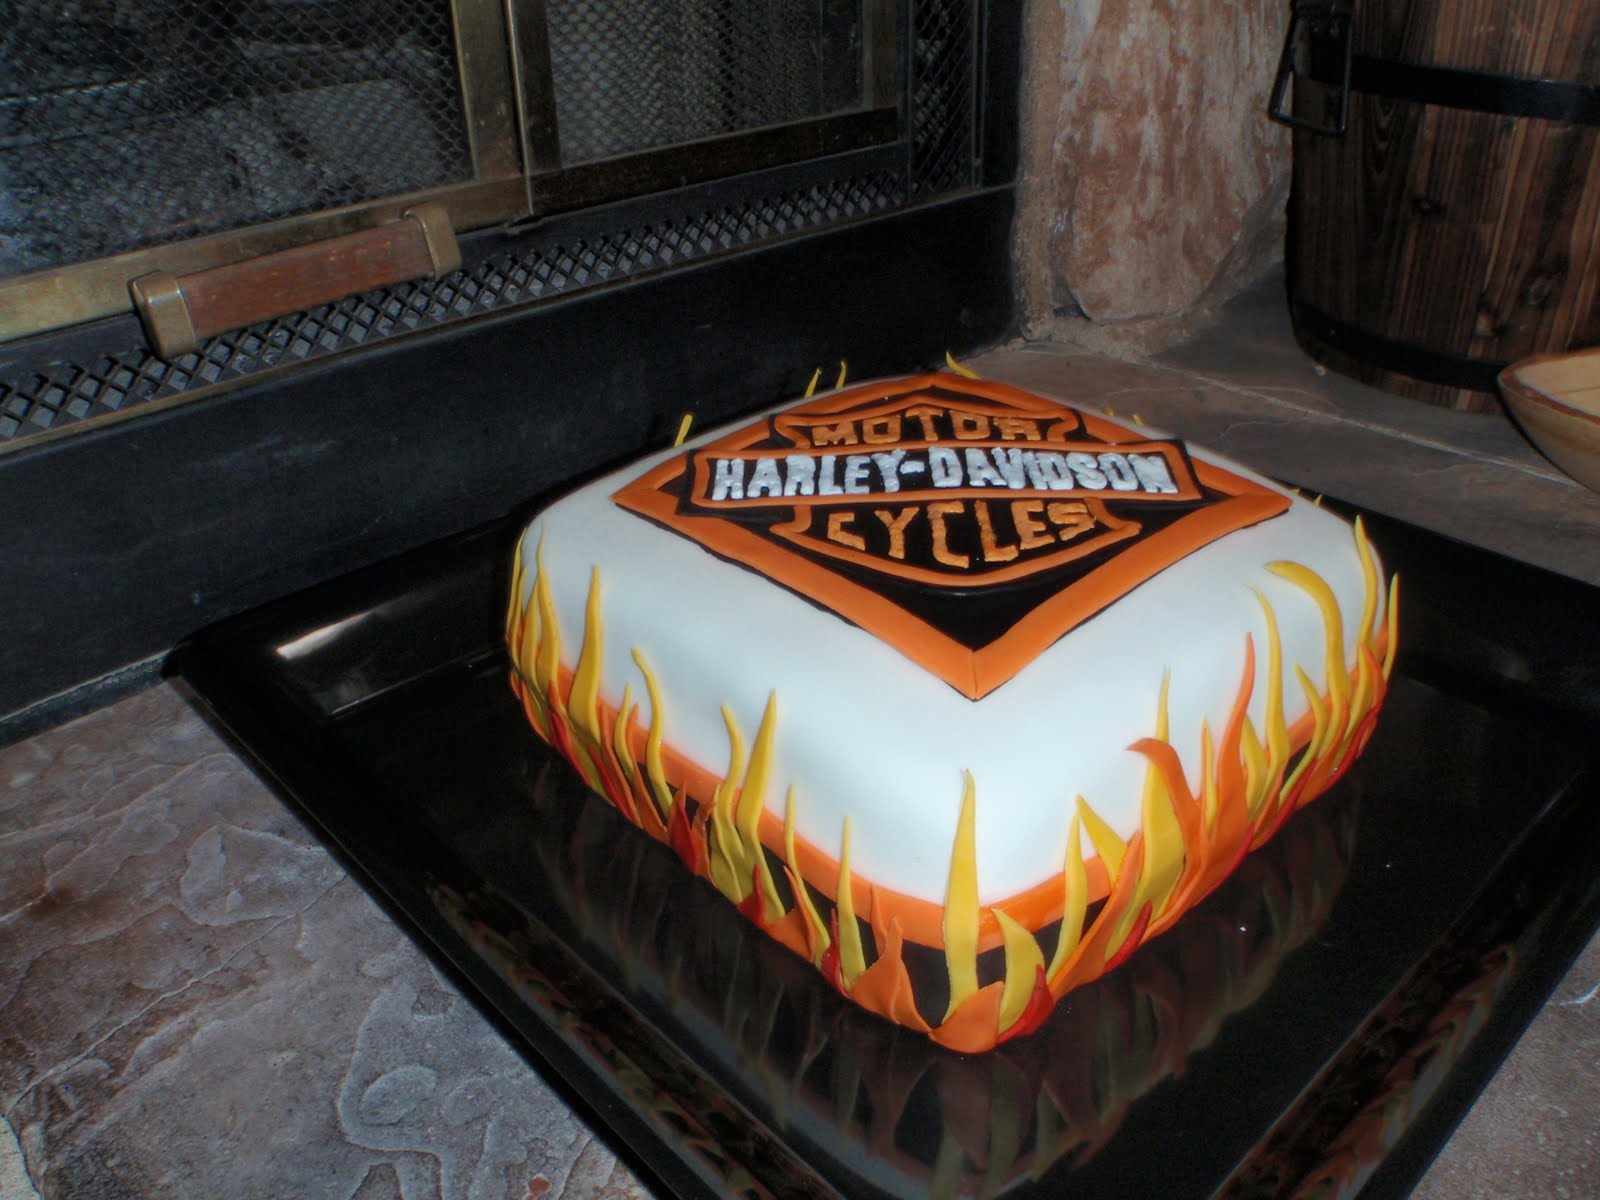 Harley-Davidson Cakes